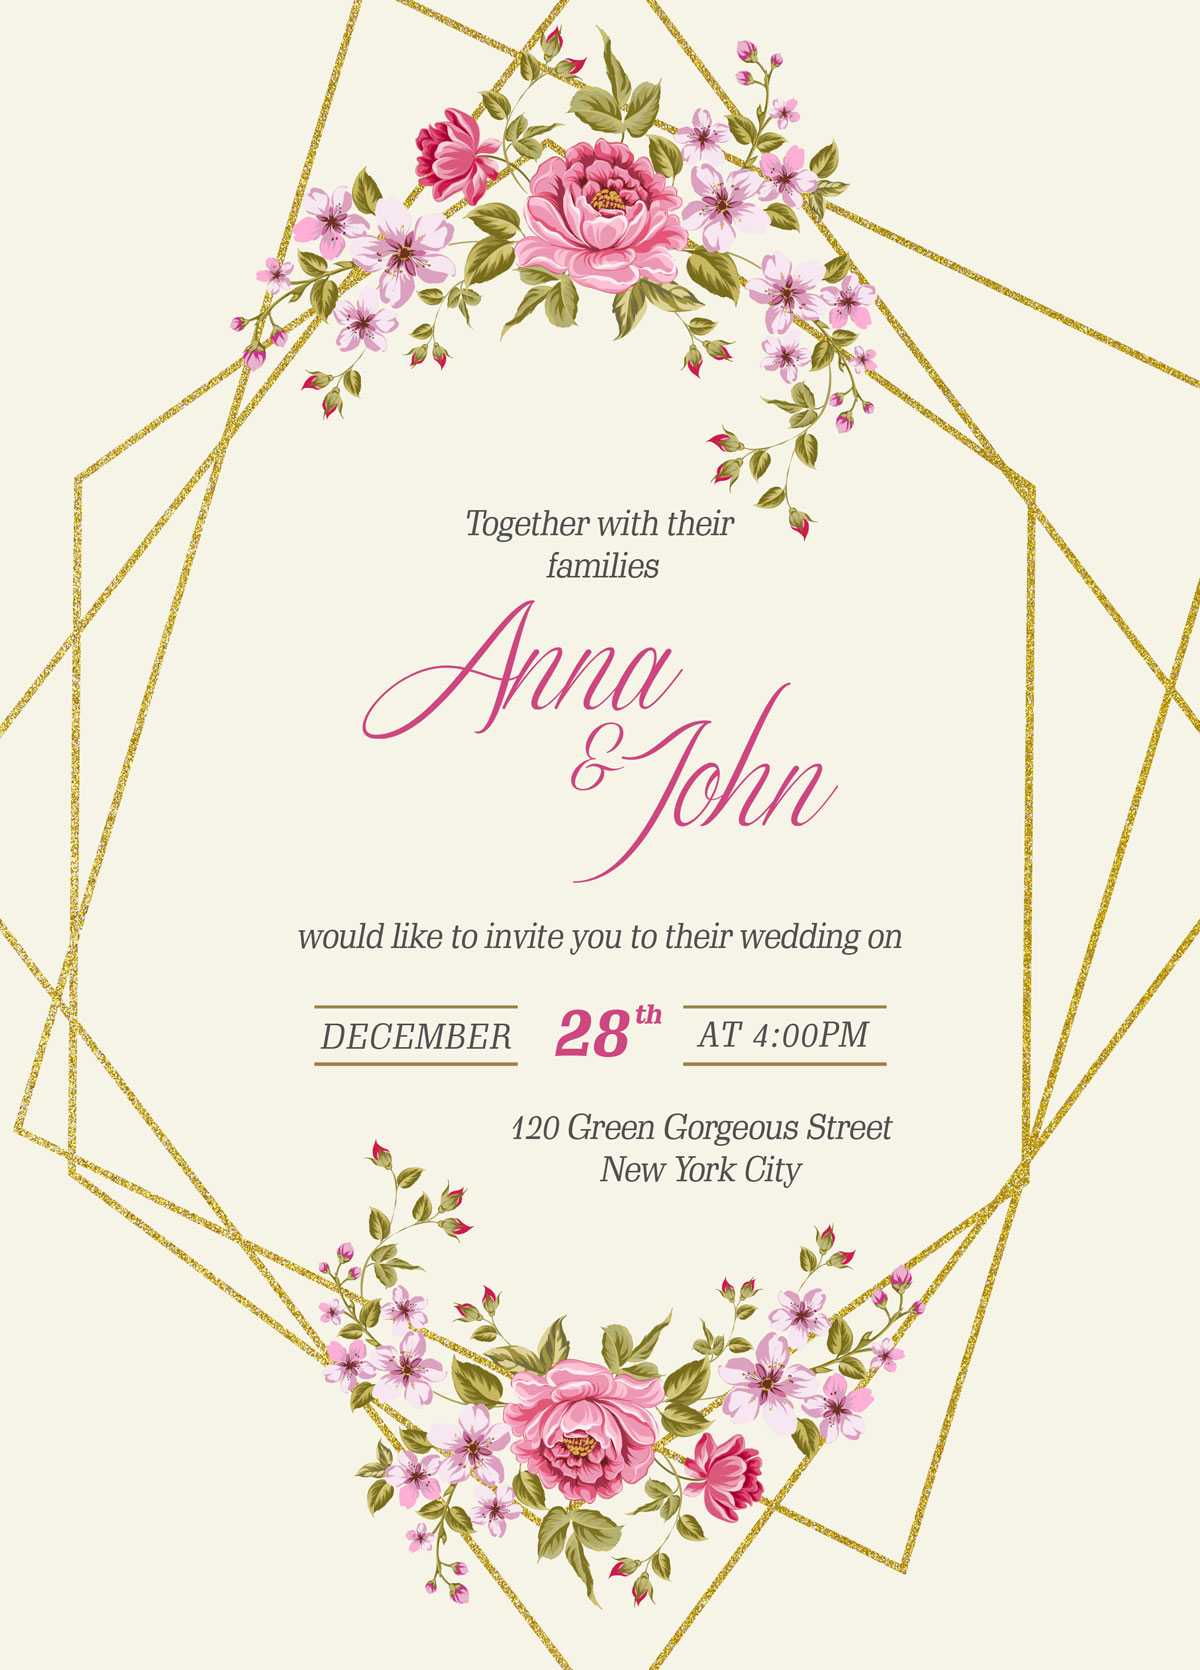 Free Wedding Invitation Card Template & Mockup Psd | Designbolts In Free E Wedding Invitation Card Templates